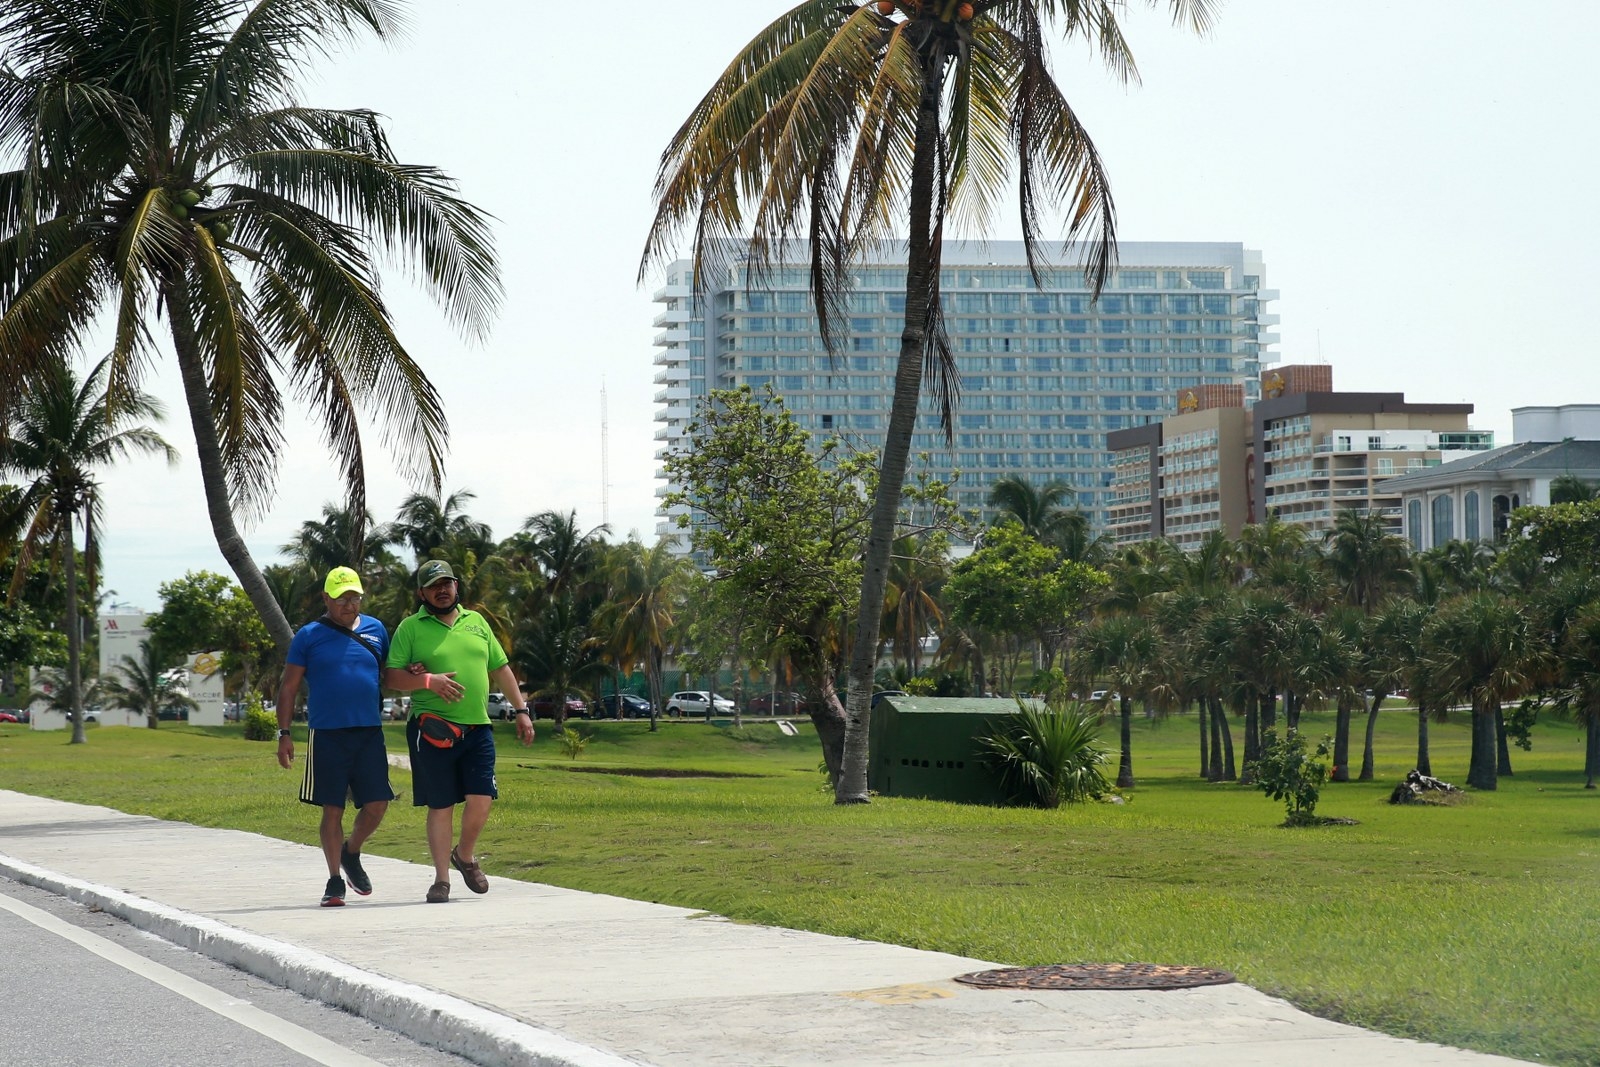 Hoteleros de Cancún alistan 90 refugios anticiclónicos en esta Temporada de Huracanes 2022